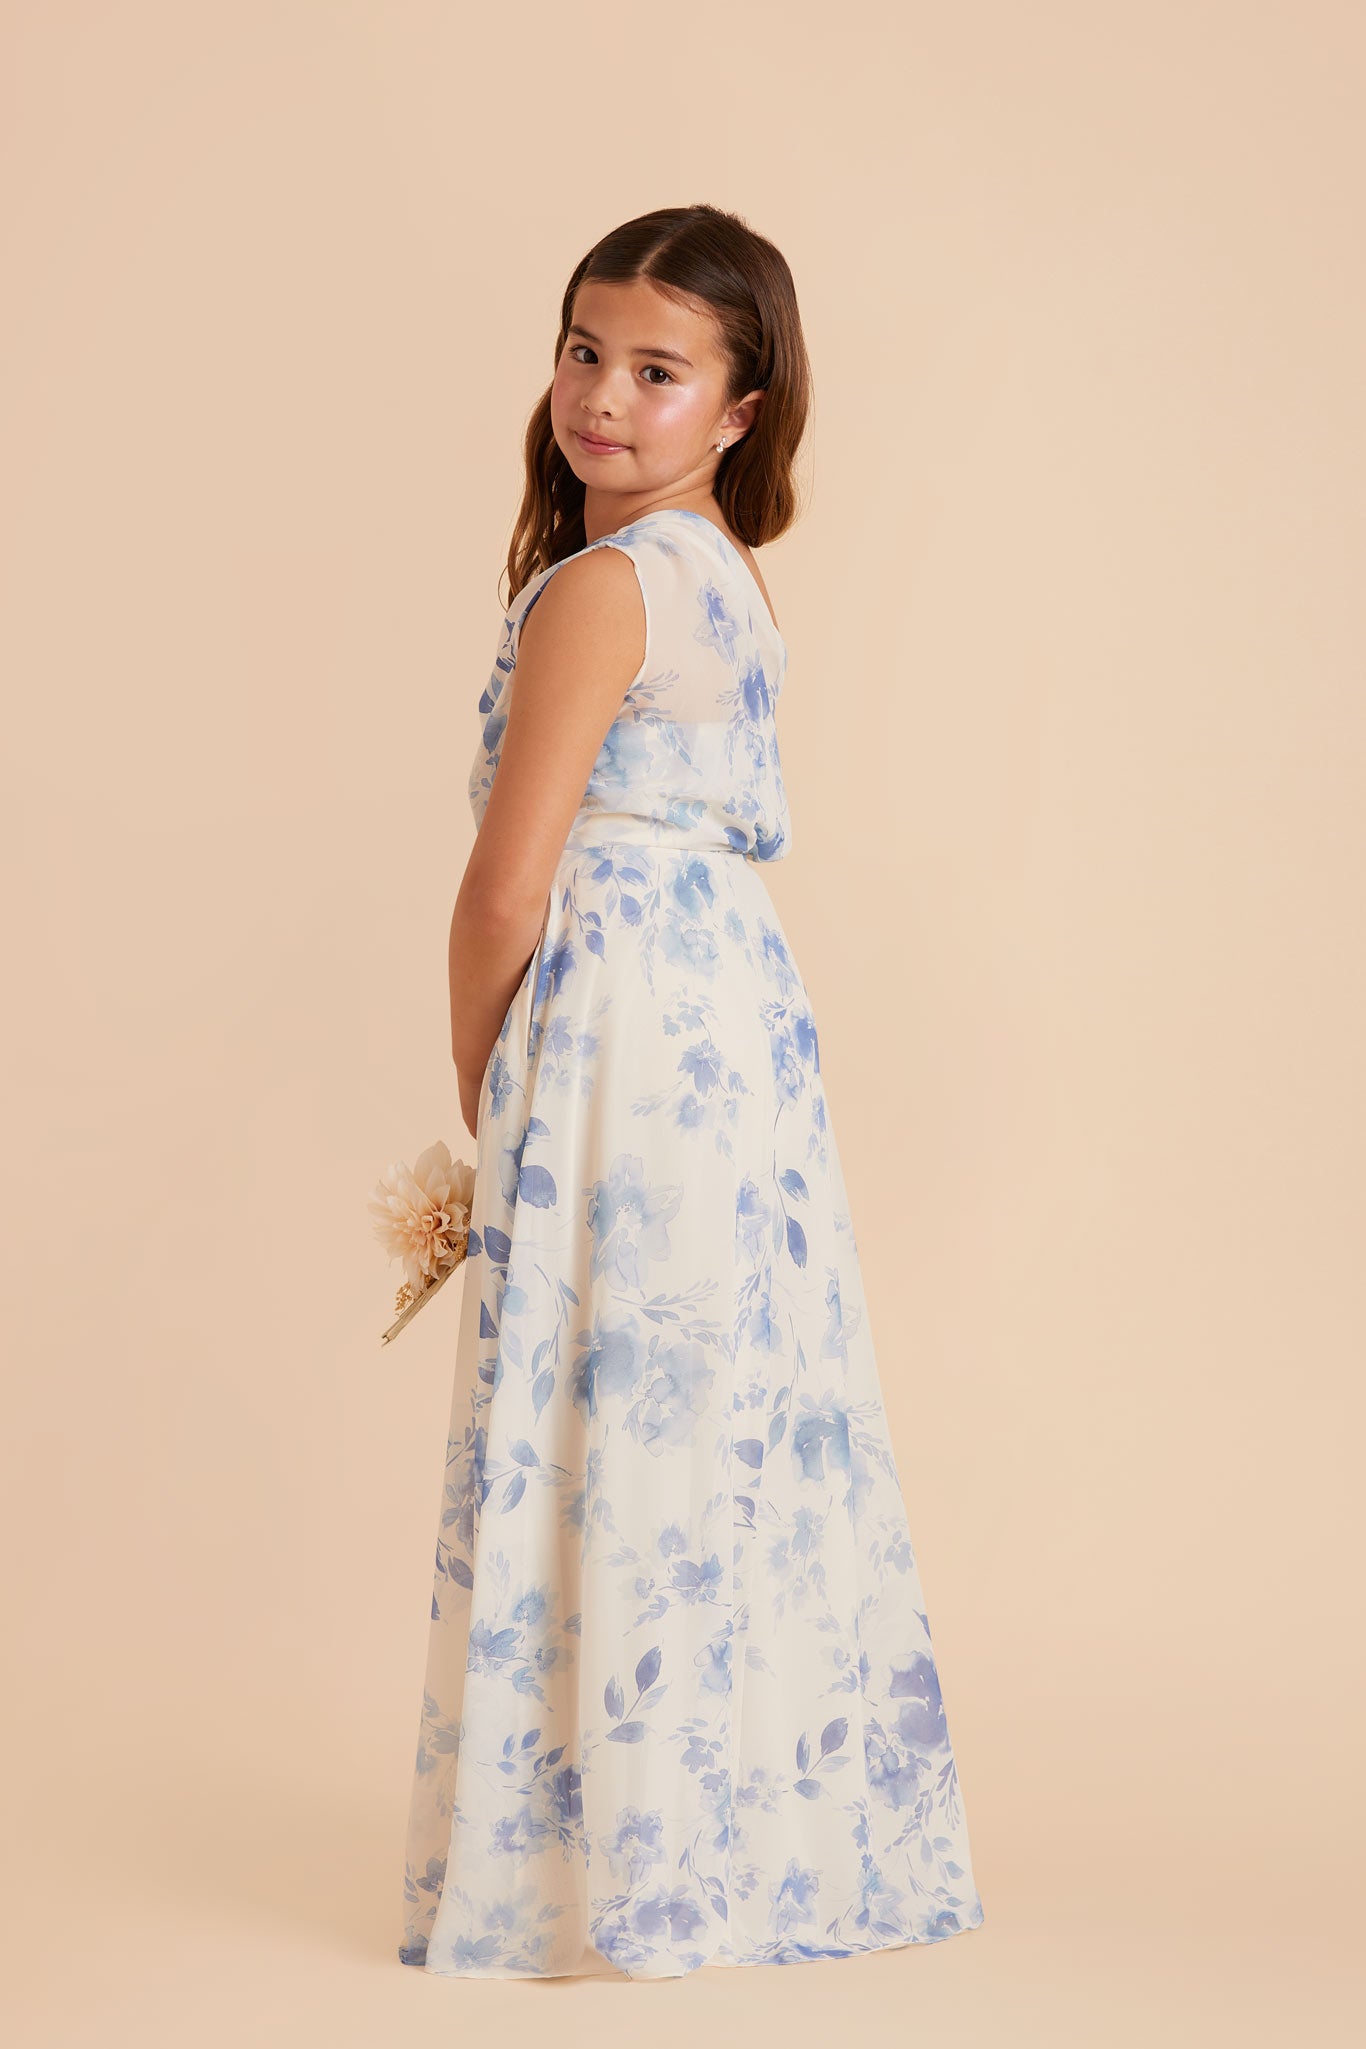 Blue Rococo Flora Kiara Junior Chiffon Dress by Birdy Grey